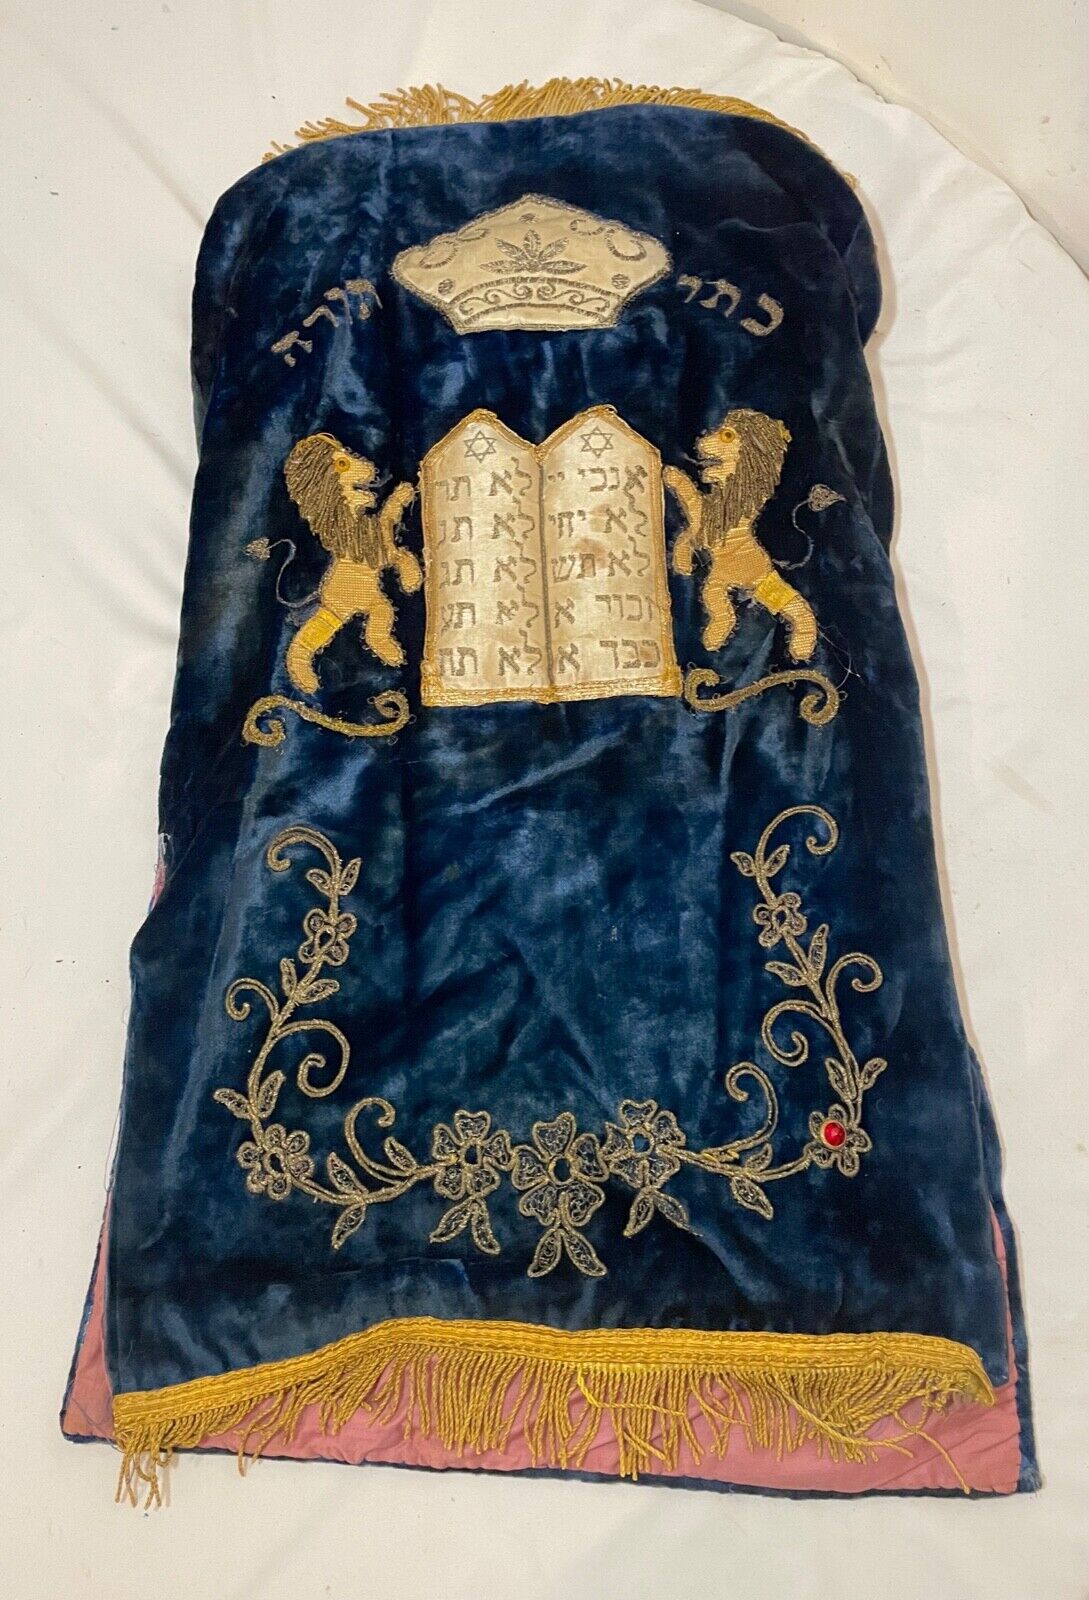 RARE antique hand embroidered Judaica Jewish memorial Torah mantel scroll cover`